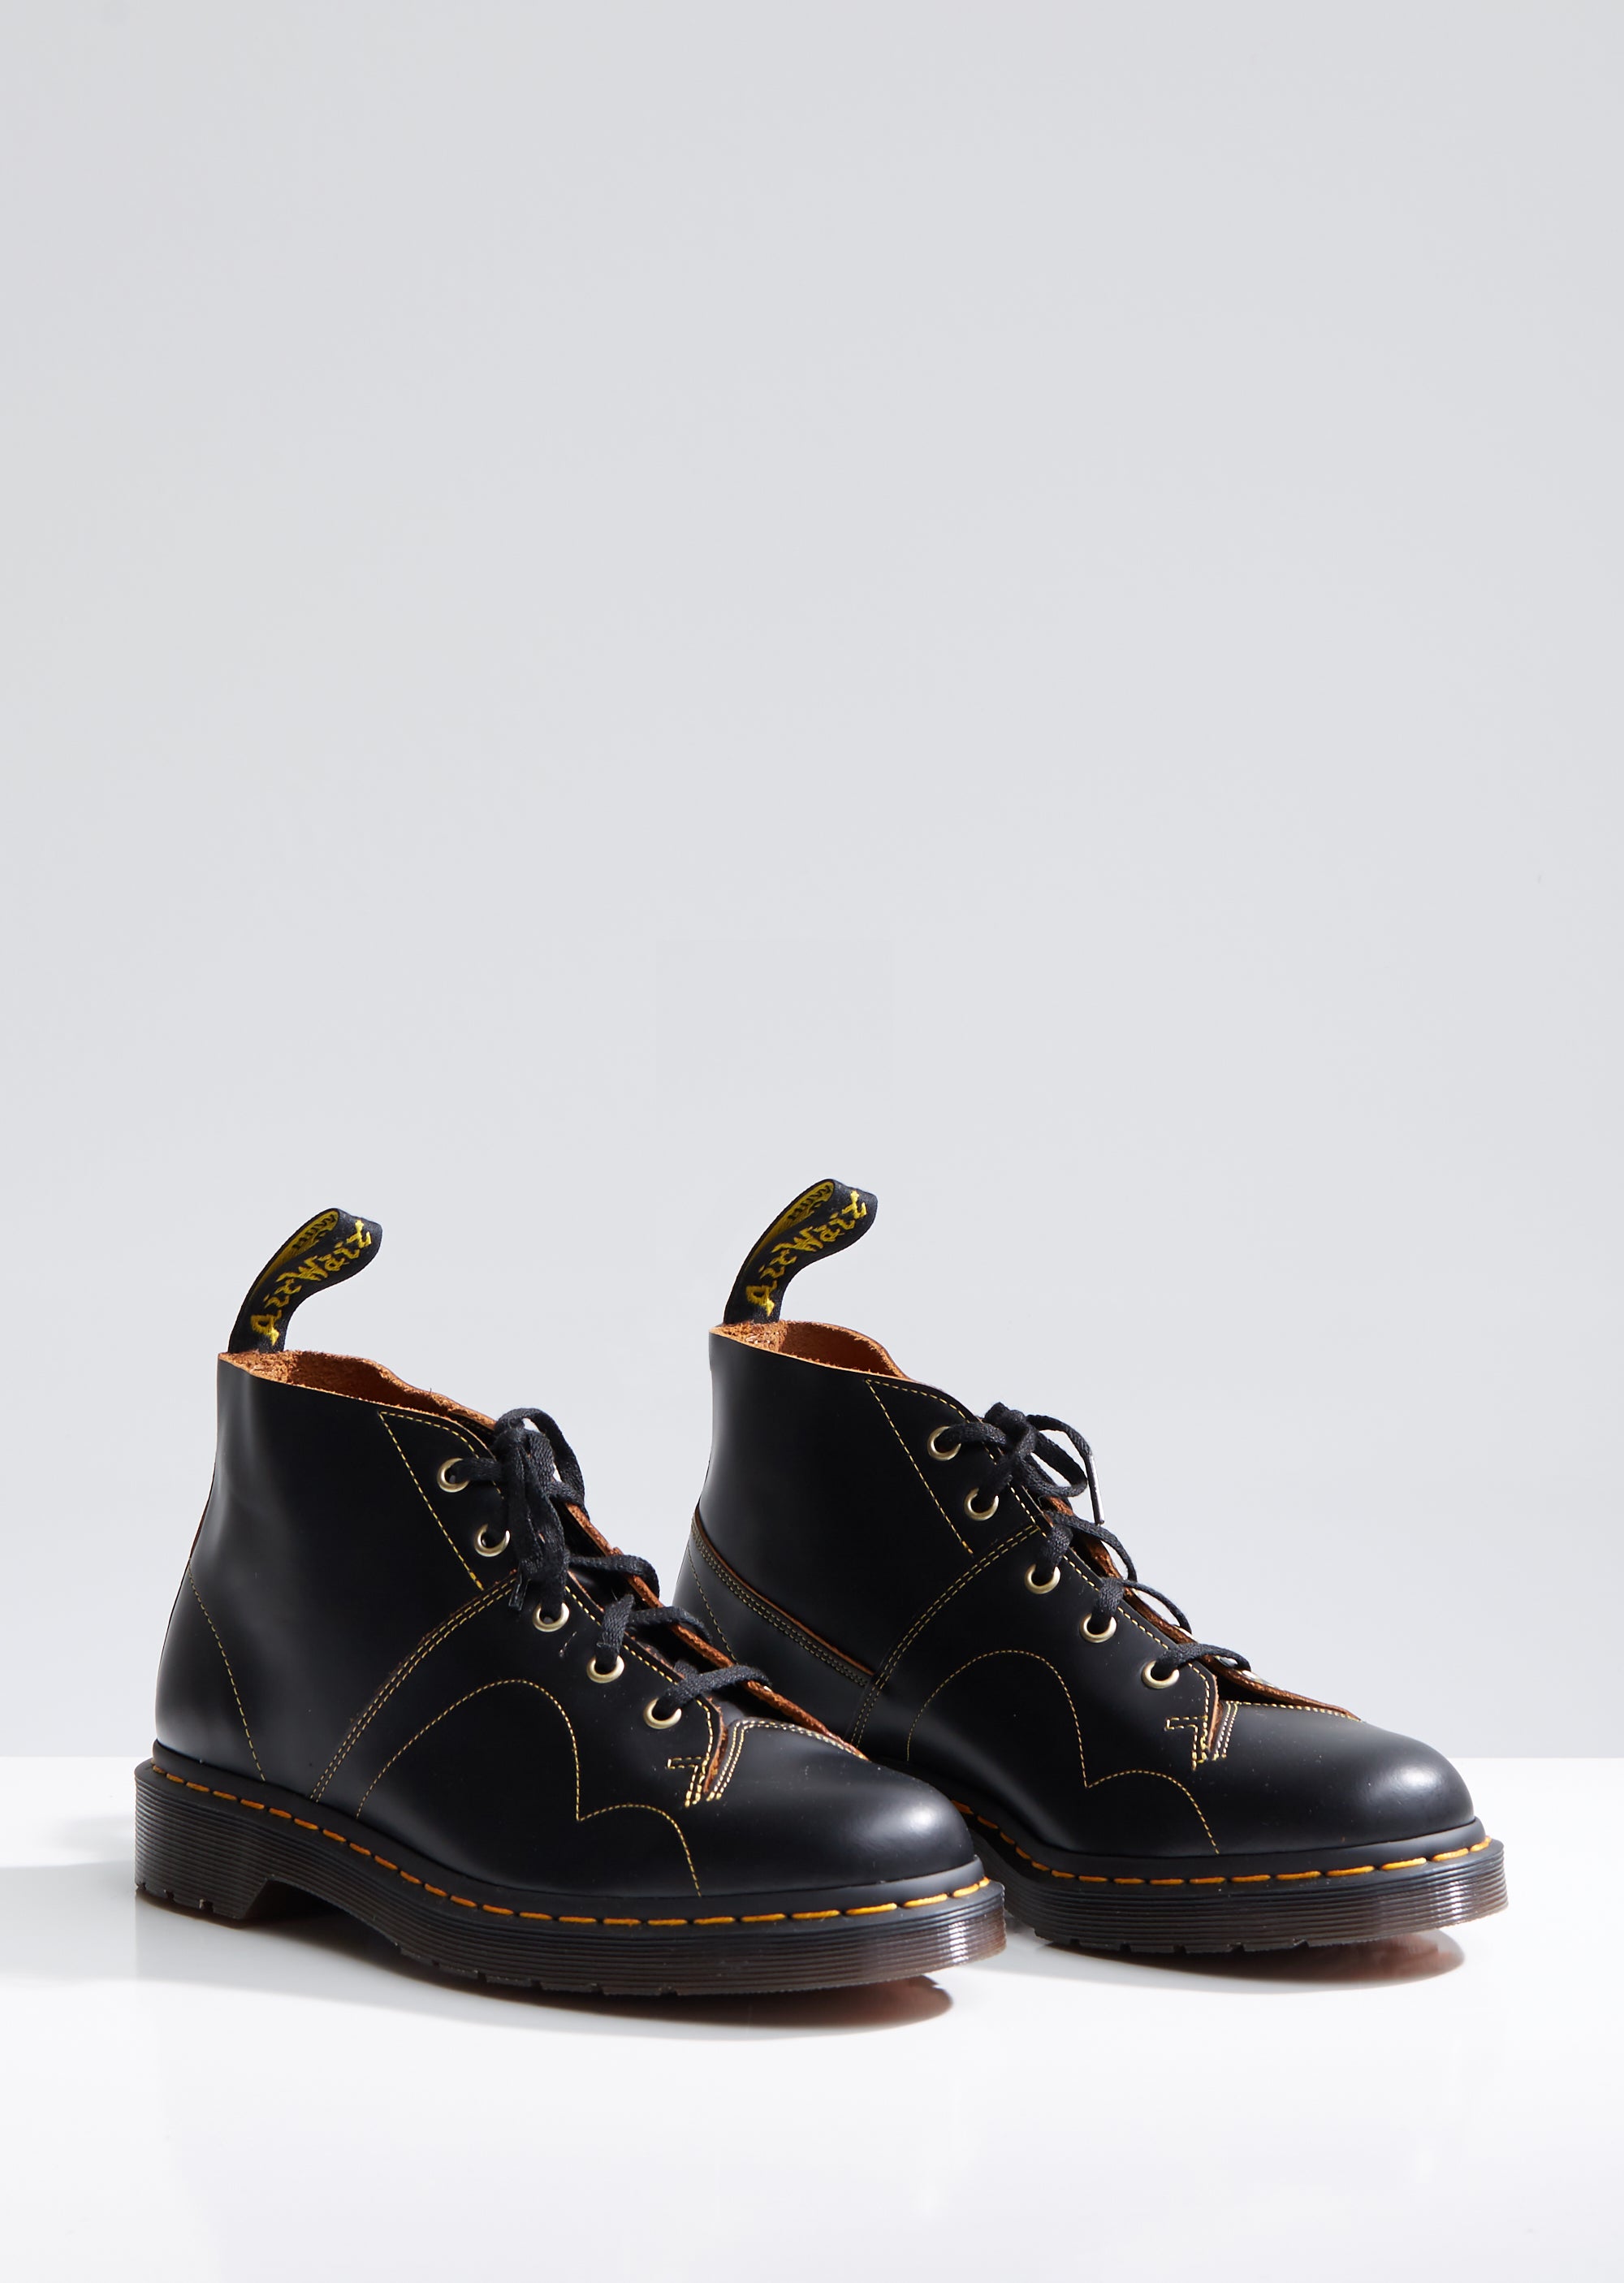 Dr. Martens Black Church Vintage Boots